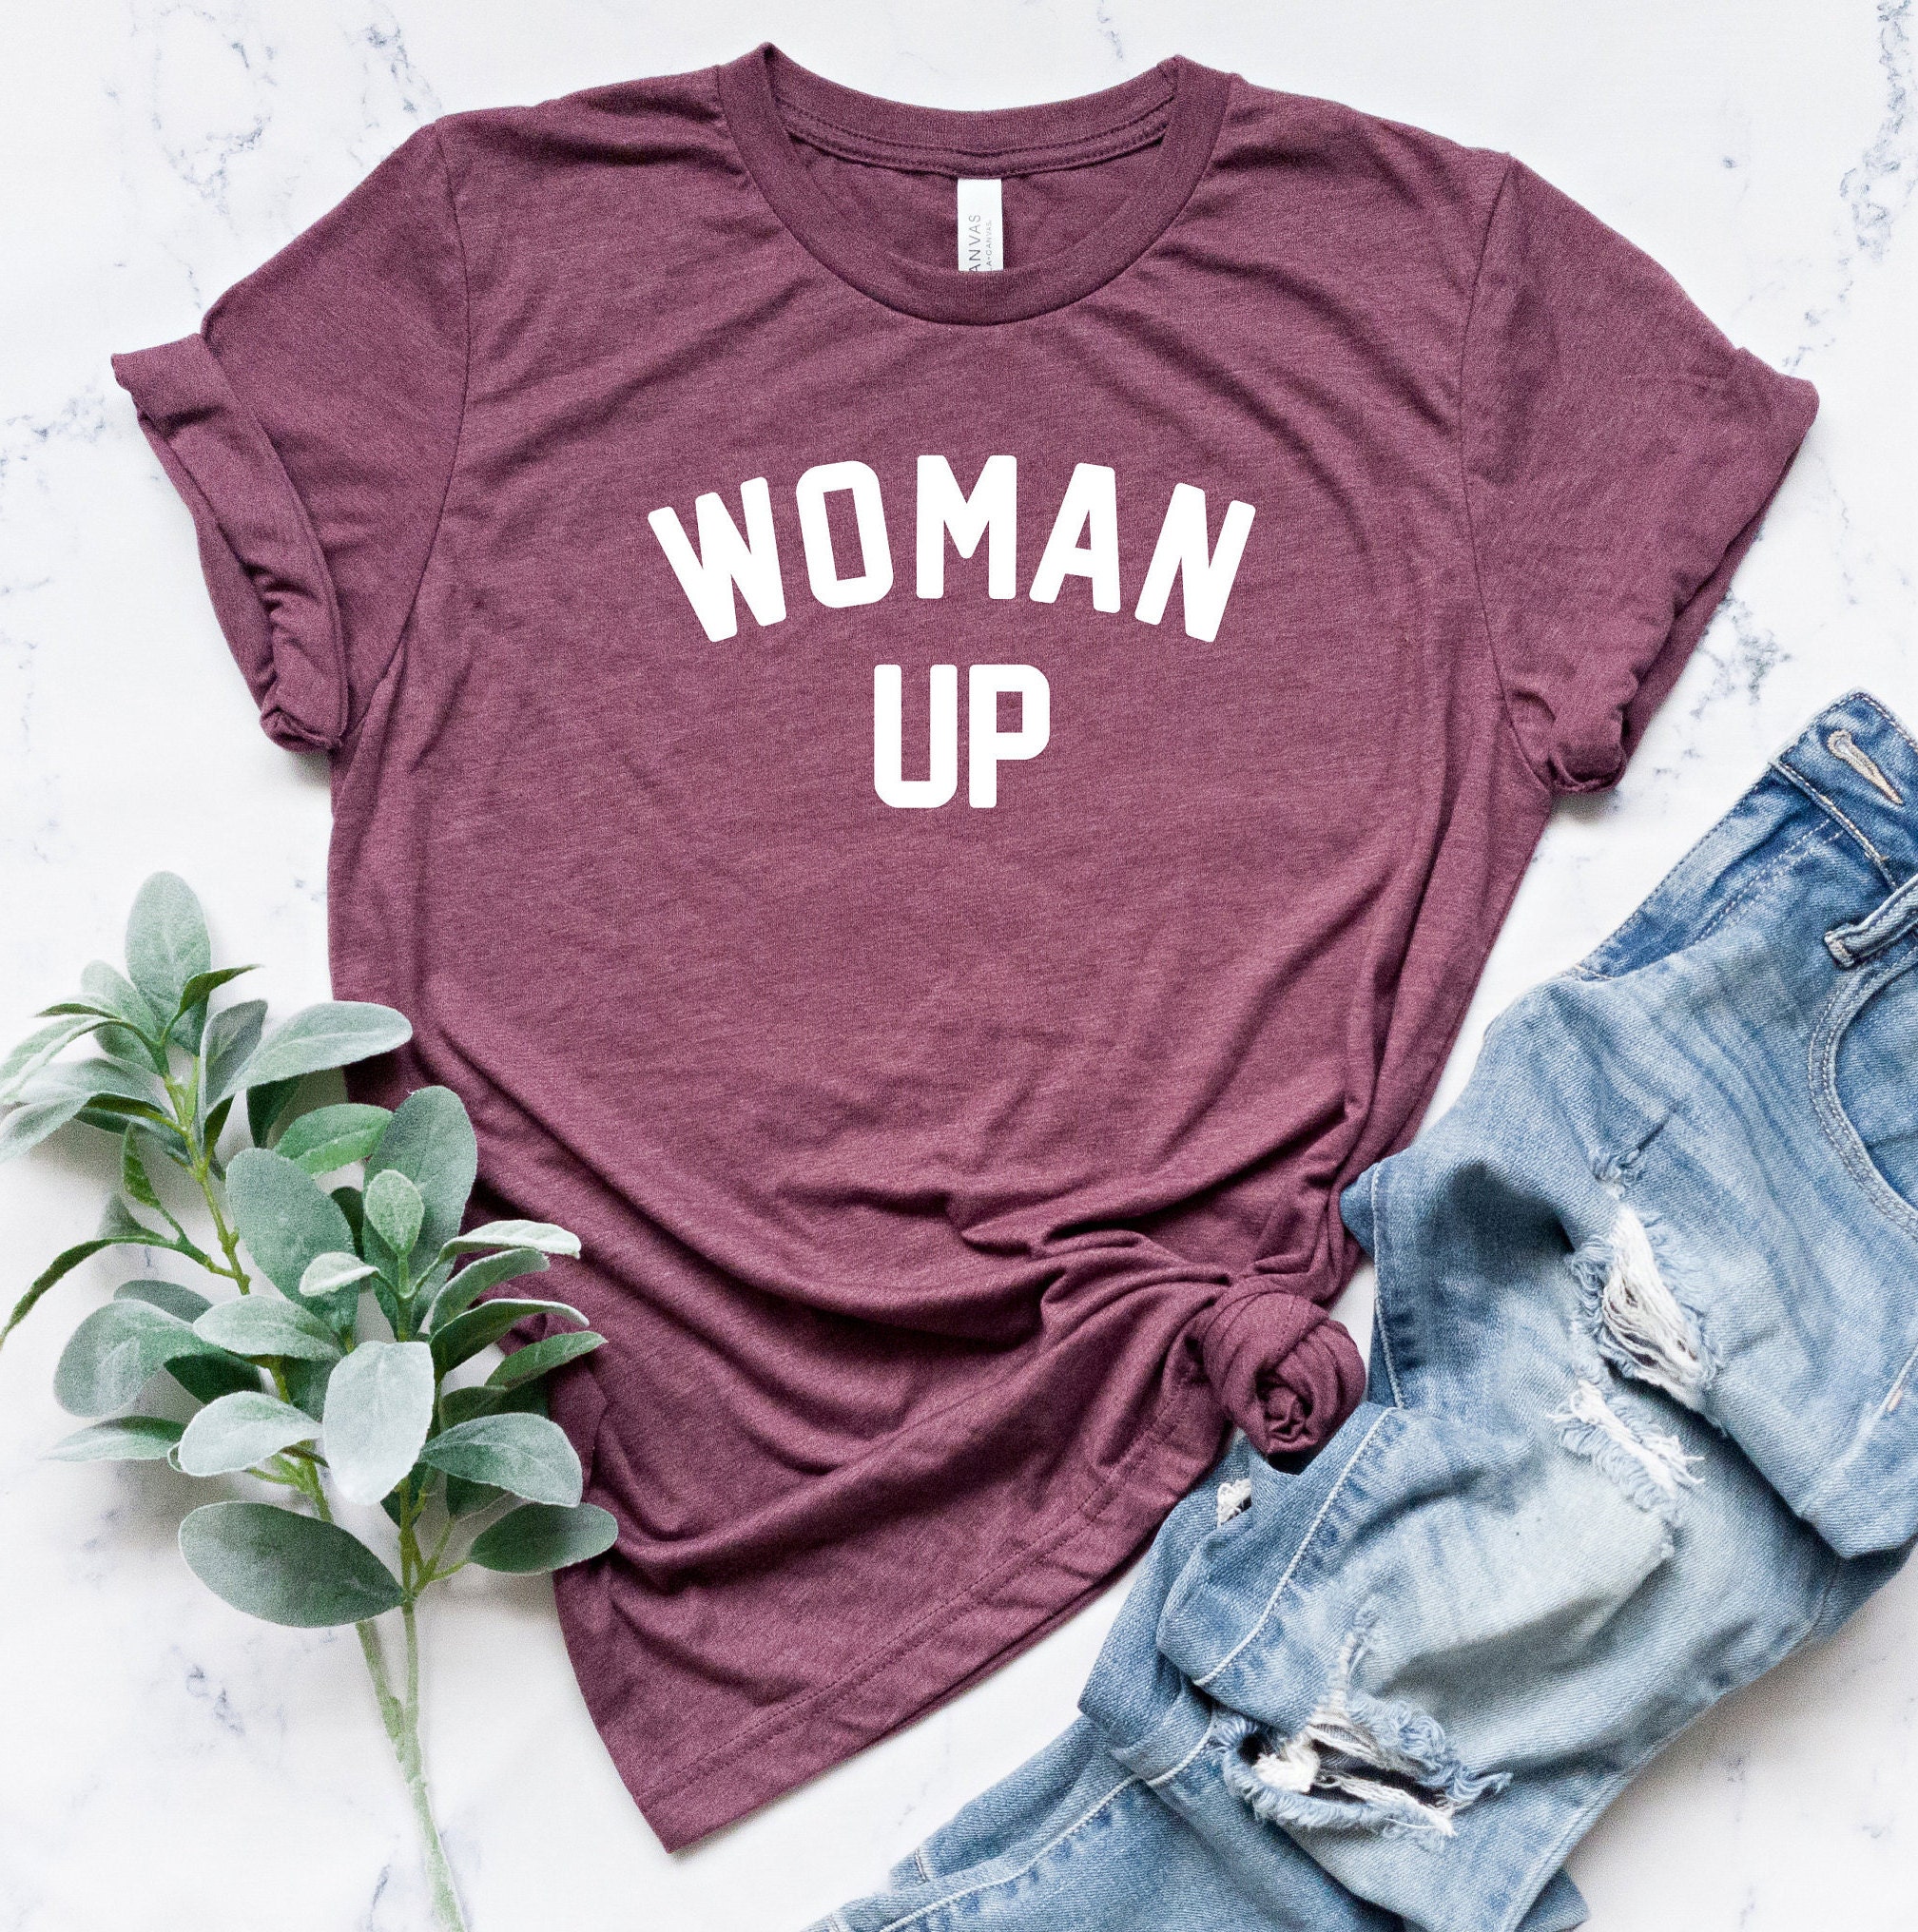 Discover Woman Up T-shirt Feminist Woman Up Shirt Strong Woman Shirt Girl Power Shirt International Womens Day Month Gift Tee Shirt Sweatshirt Tote